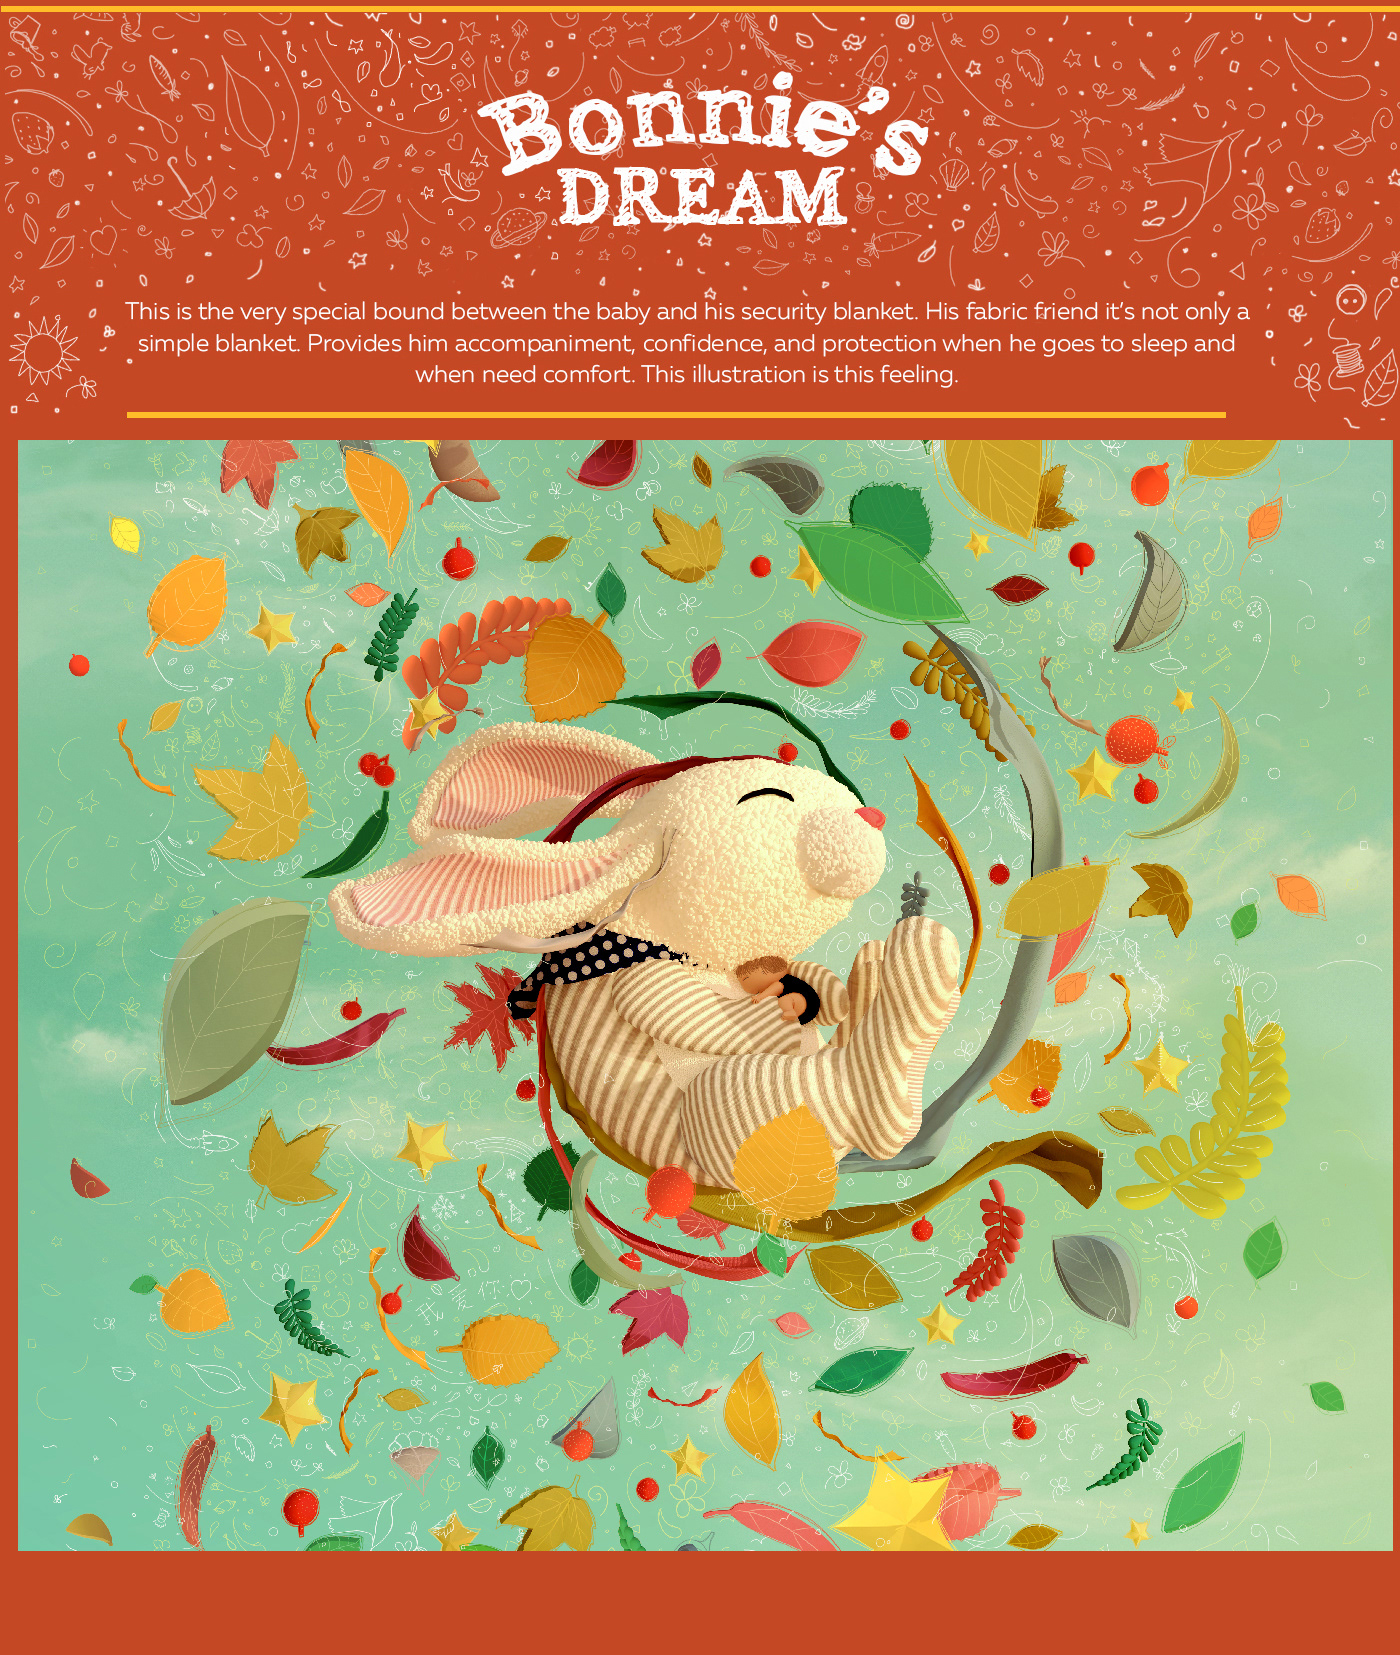 securityblanket bunny dream 3Dillustration fantasy feeling apego conejito baby sublimationprint